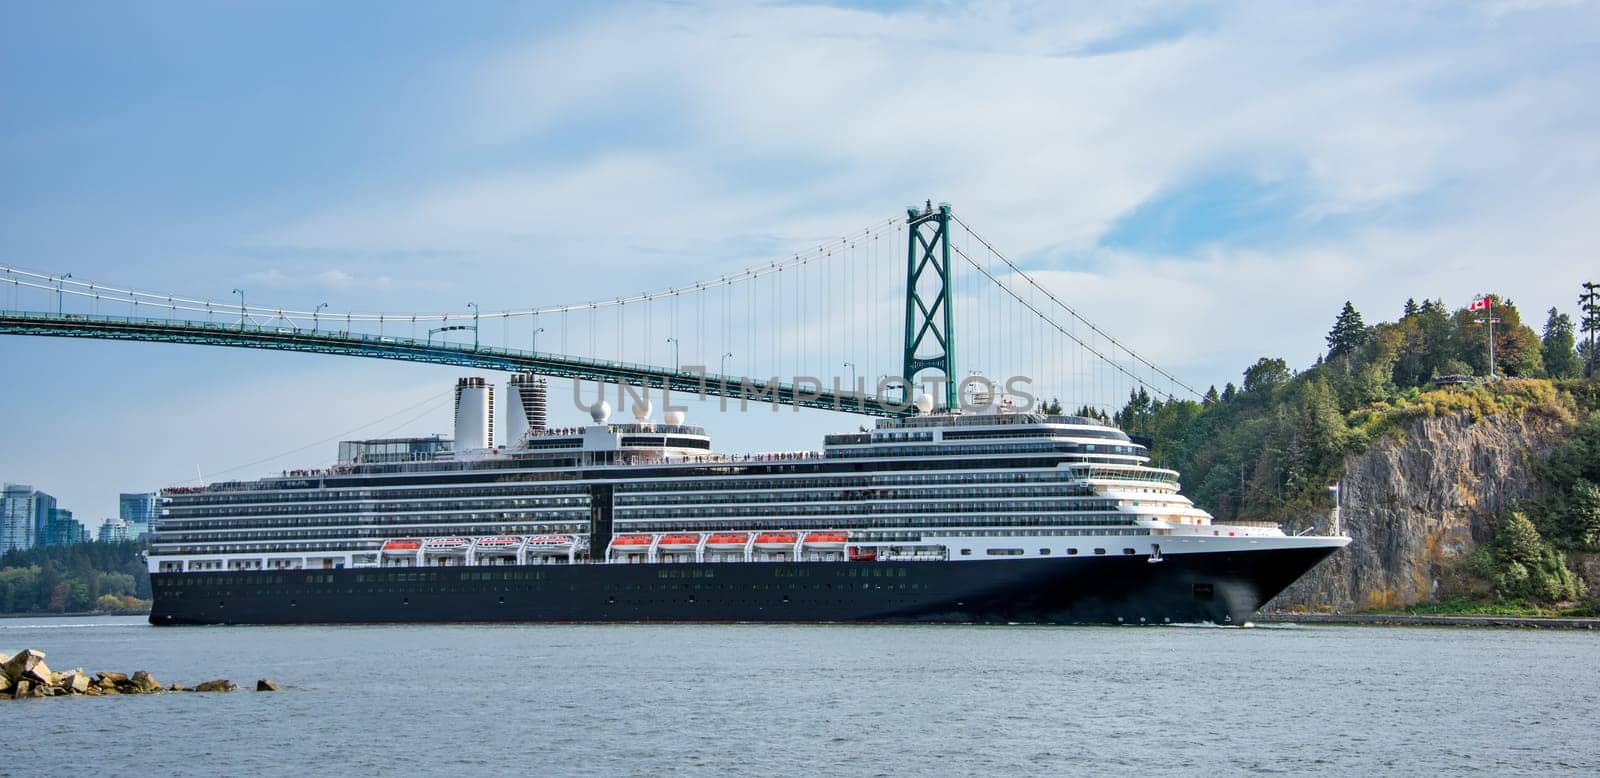 Open sea cruise ship passing under famous Lion Gates Bridge in Vancouver, Canada.